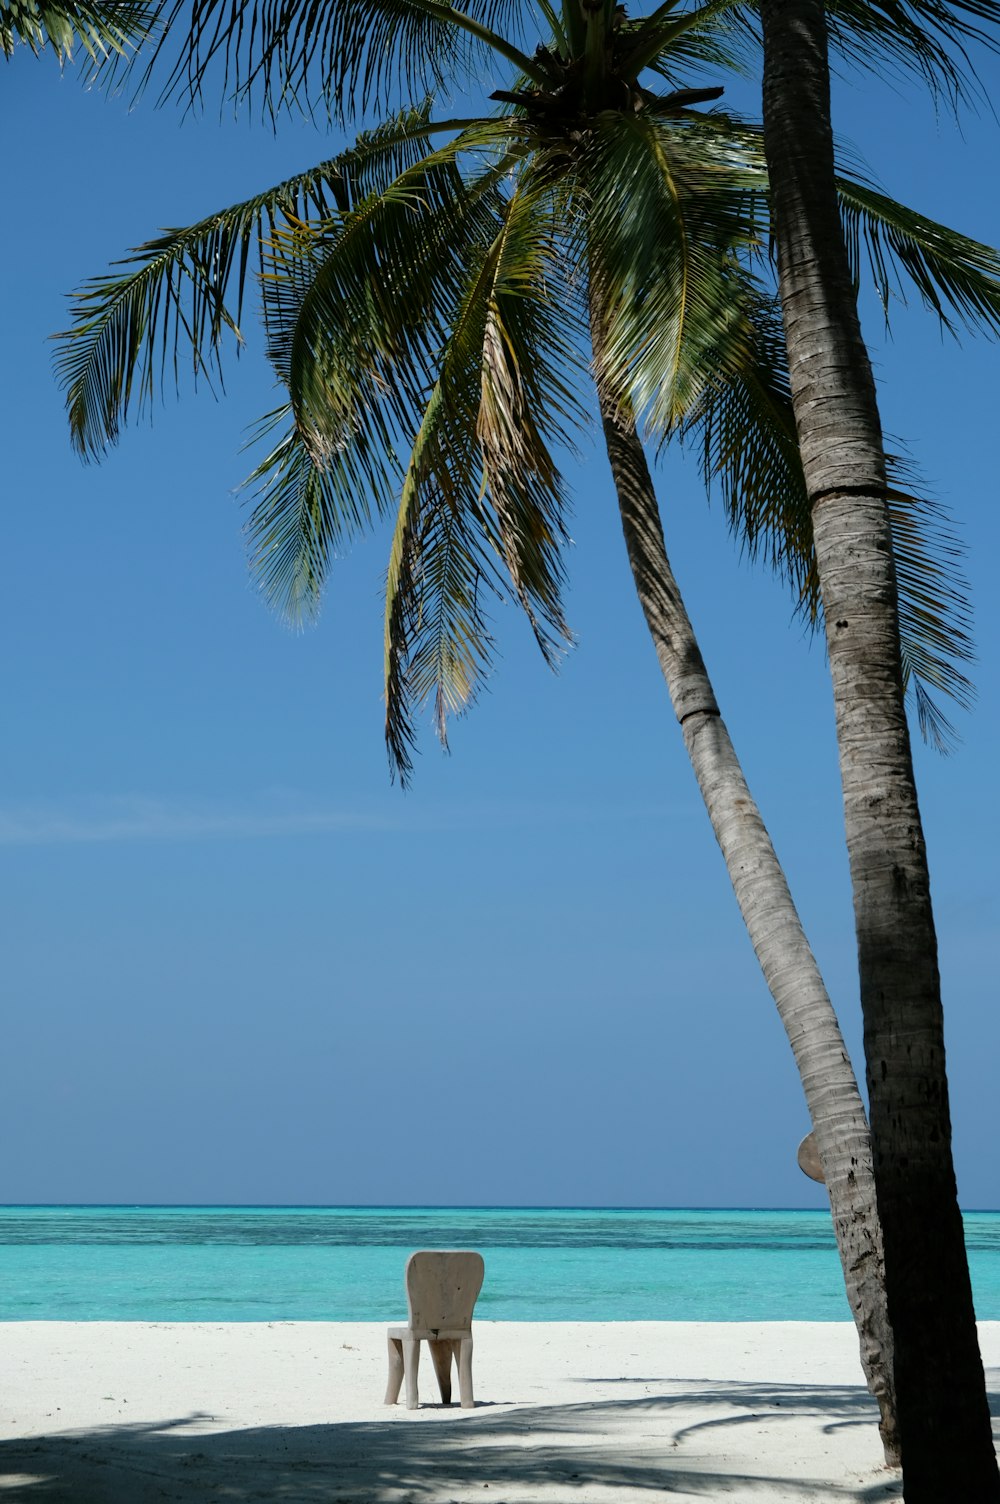 a chair under a palm tree on a beach